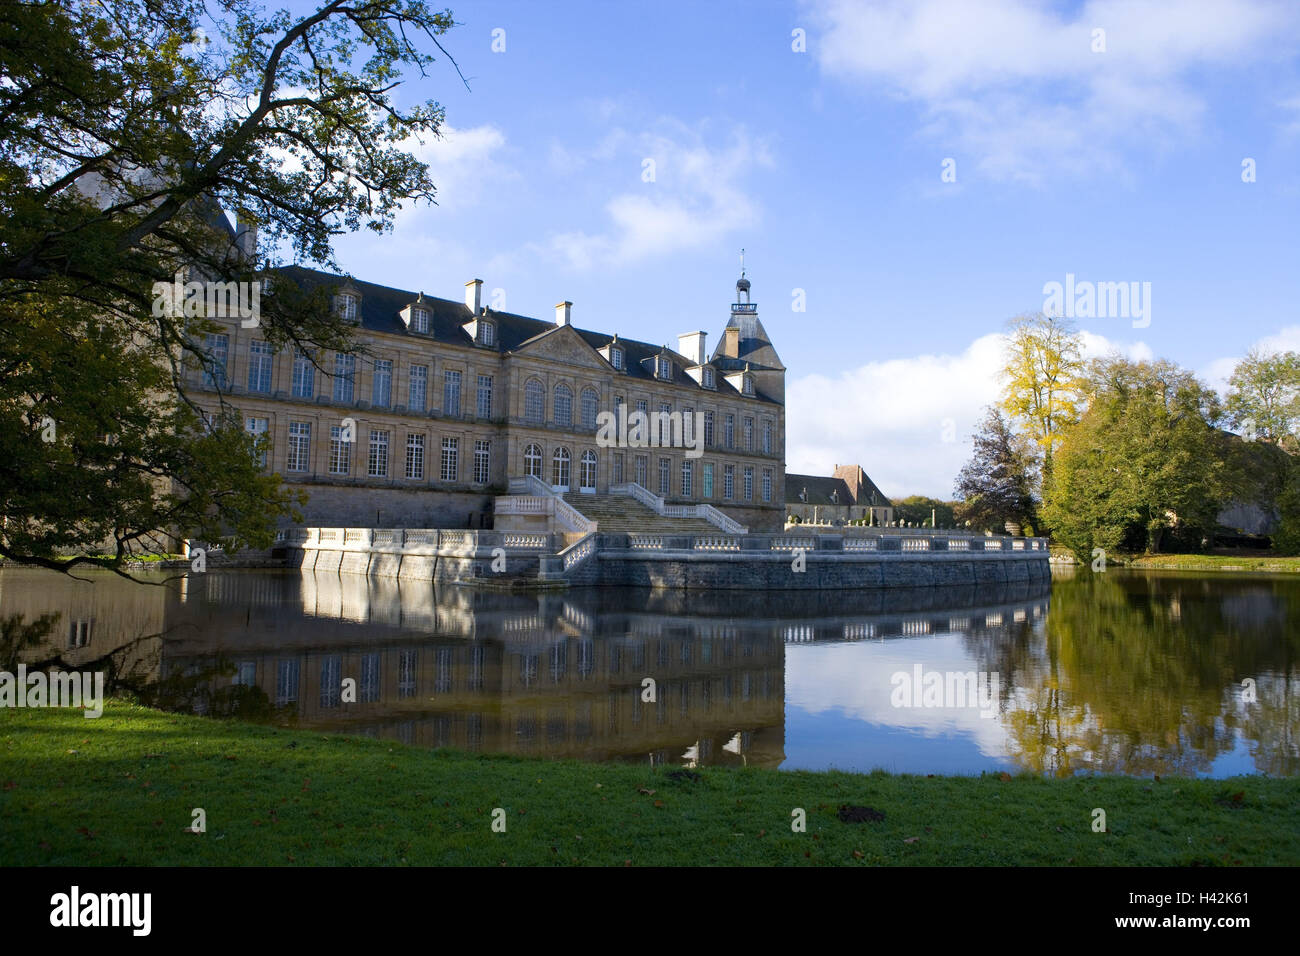 Francia, de Borgoña, de Saône-et-Loire, Chateau de Sully, castillo moated, detalle Foto de stock